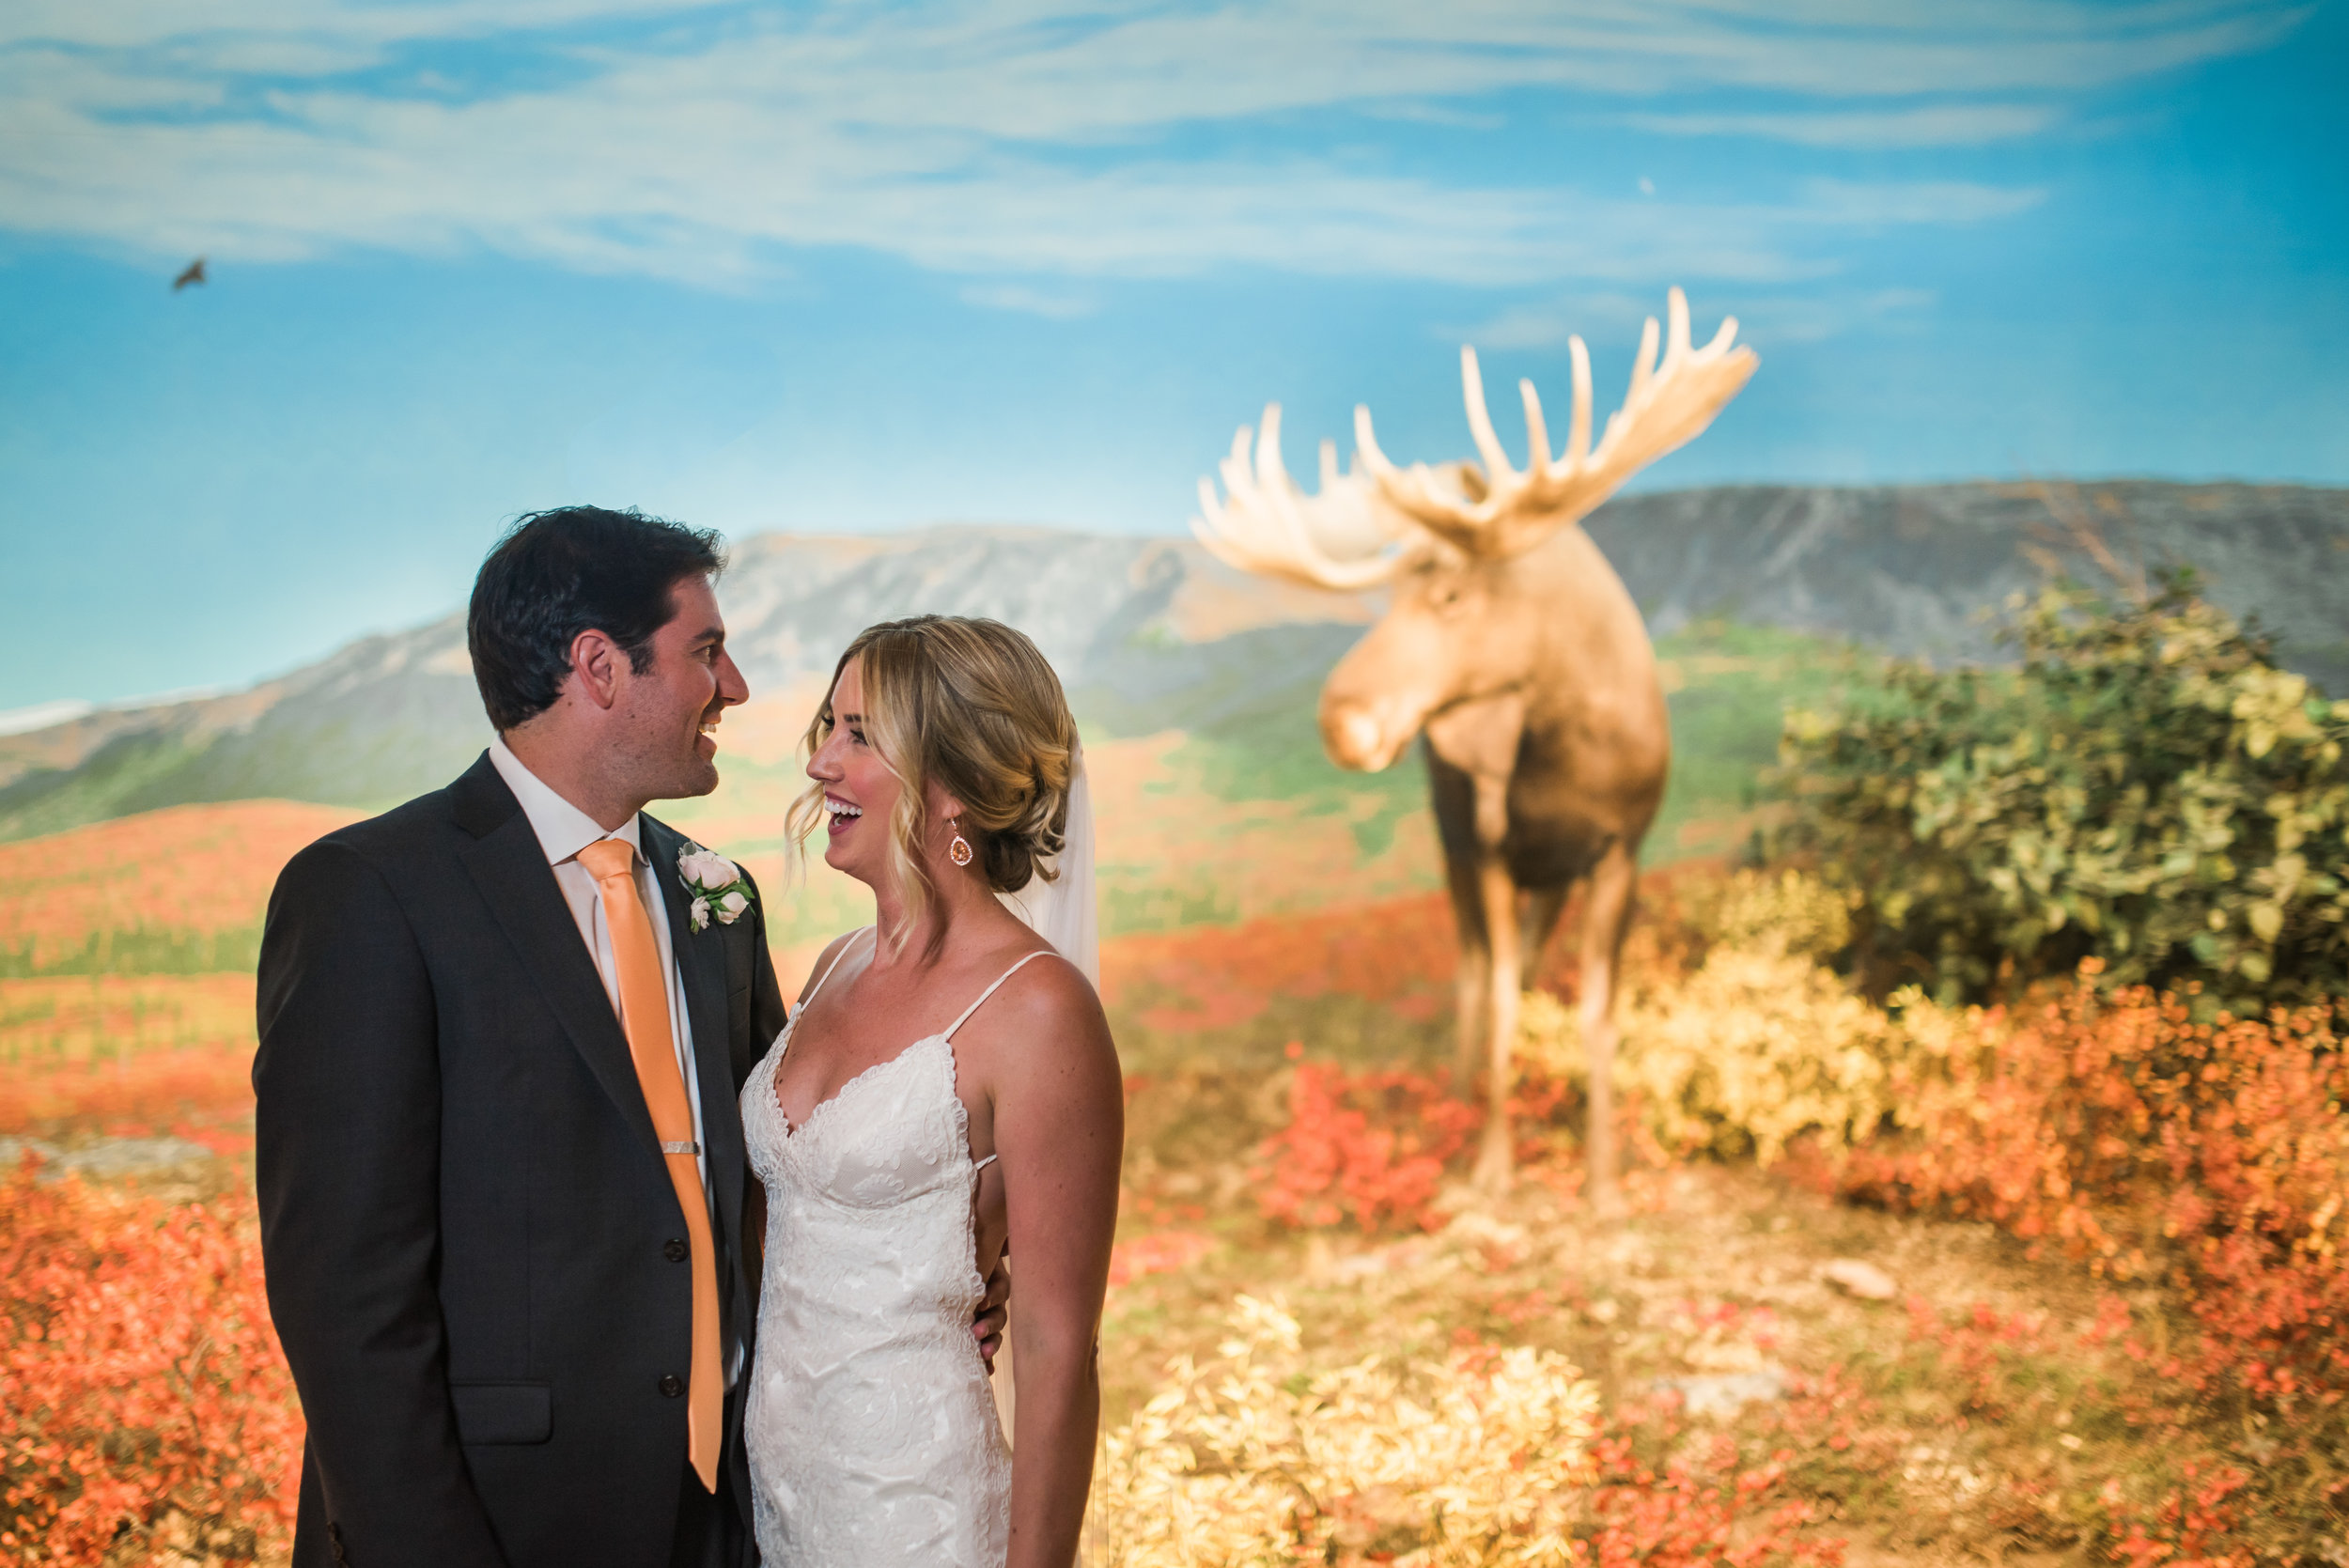 Denver Museum of Nature and Science Wedding - The Overwhelmed Bride Wedding Blog